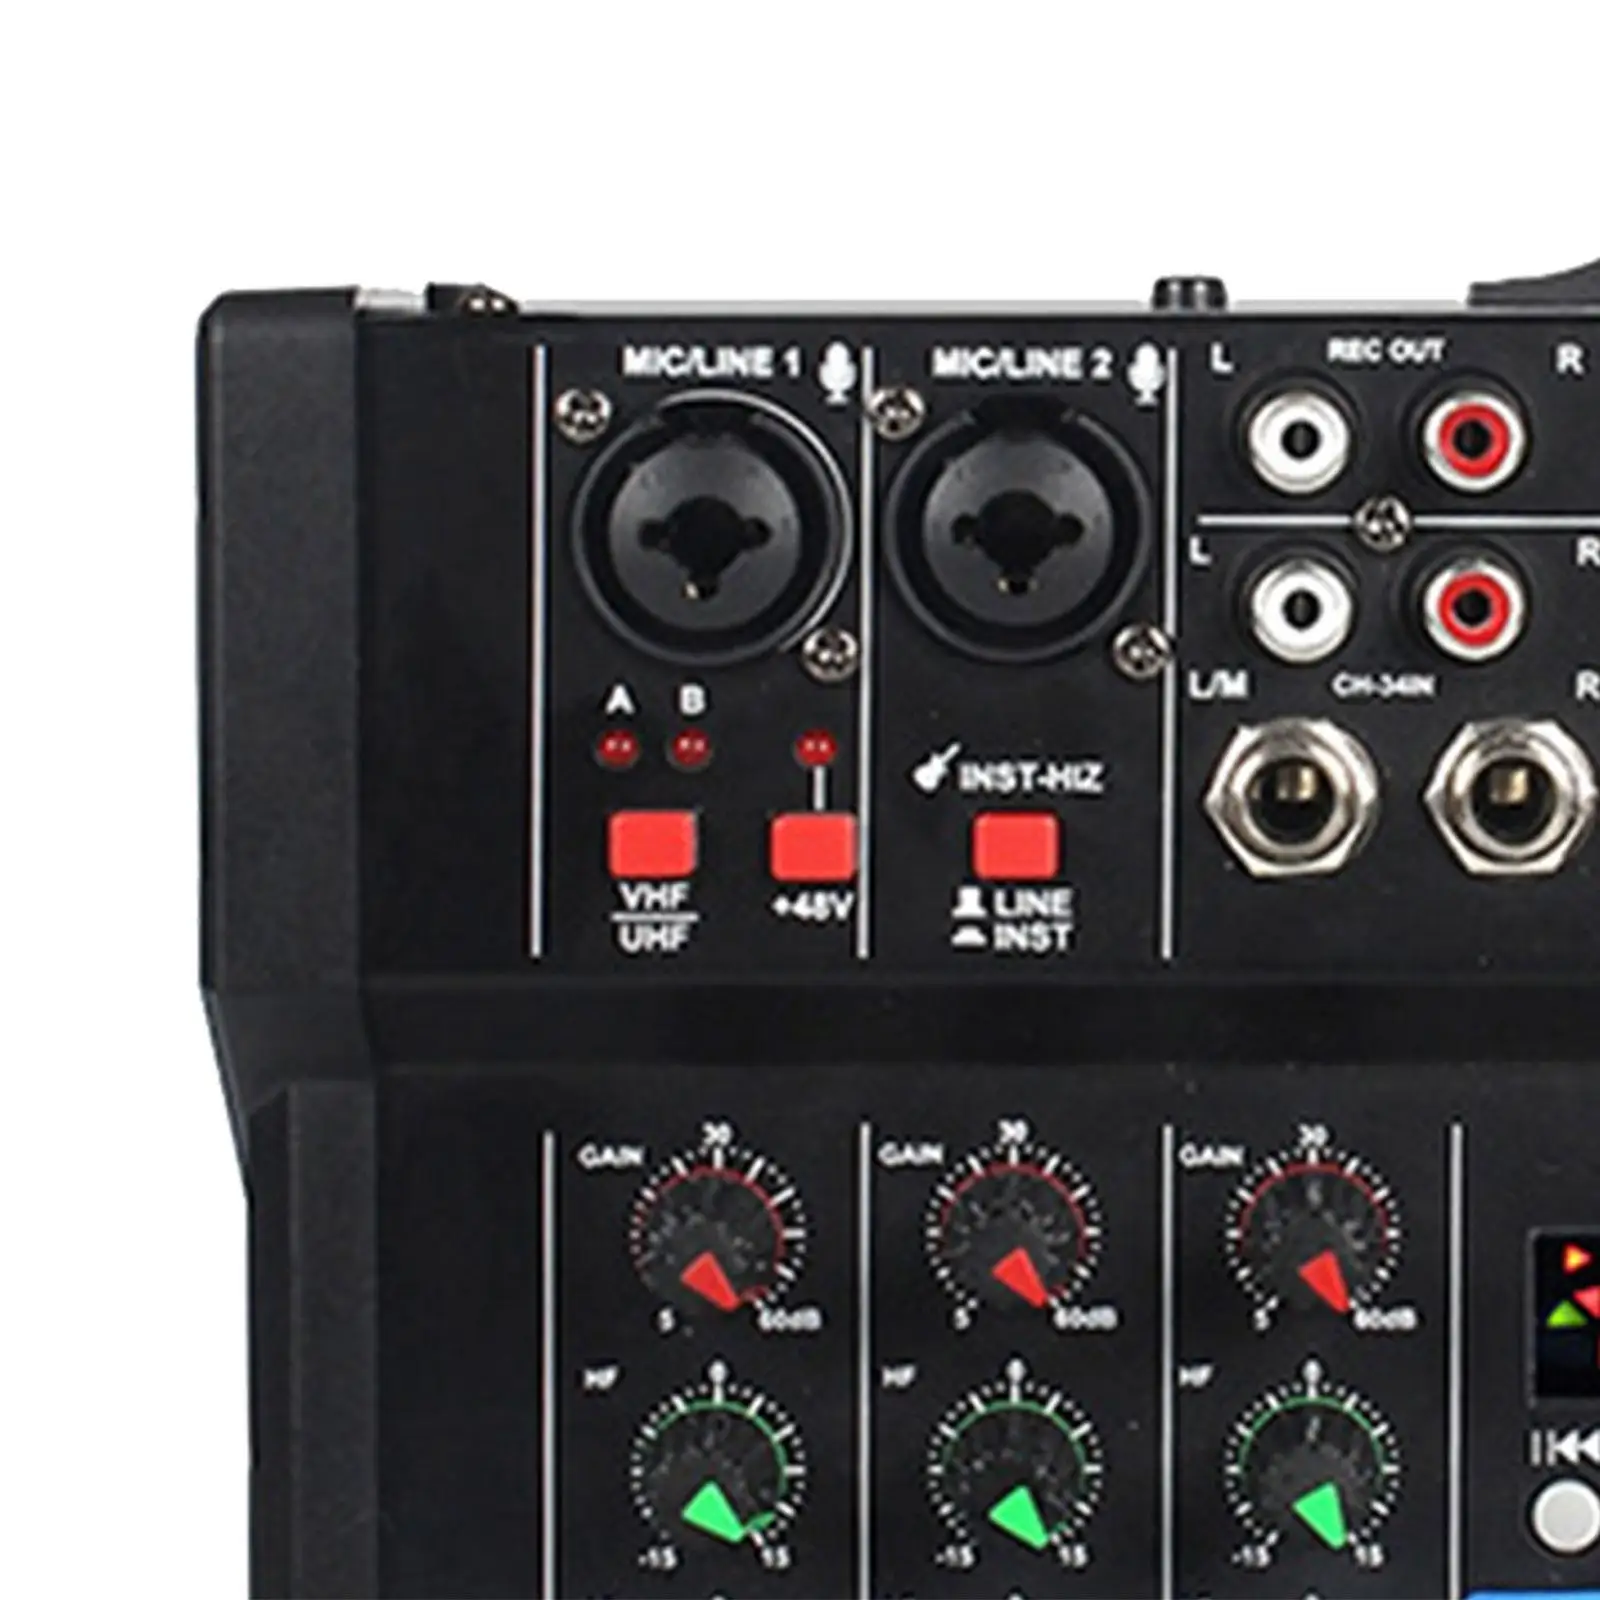 

Audio Mixer 48V Phantom 4 Channel Portable Sound Board Console Sound Mixer for Karaoke Home DJ Mixing Studio Recording